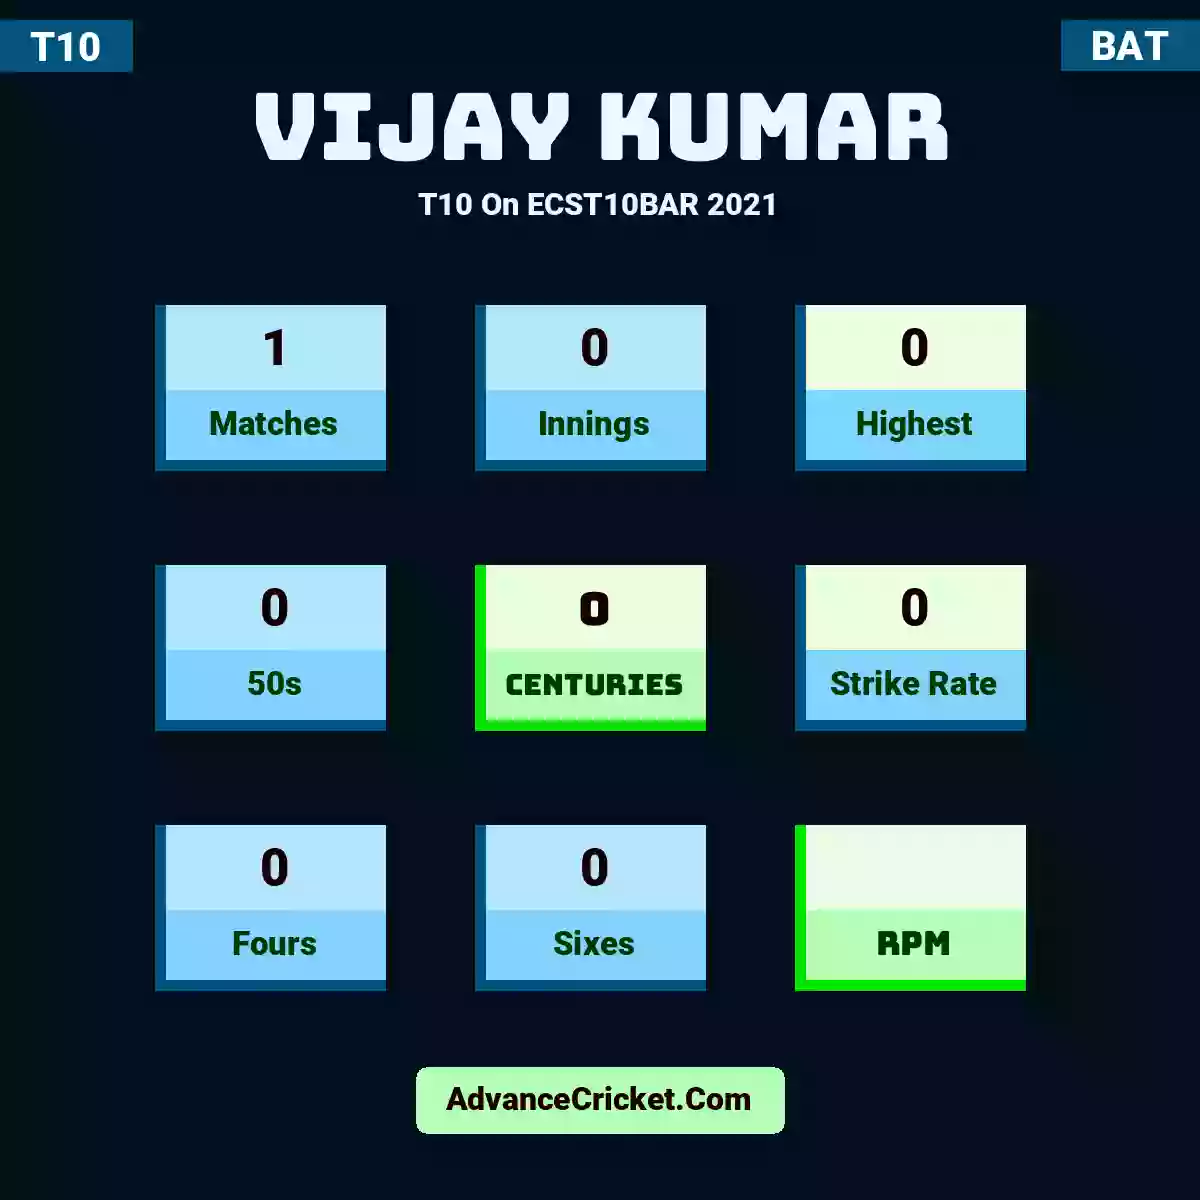 Vijay Kumar T10  On ECST10BAR 2021, Vijay Kumar played 1 matches, scored 0 runs as highest, 0 half-centuries, and 0 centuries, with a strike rate of 0. V.Kumar hit 0 fours and 0 sixes.